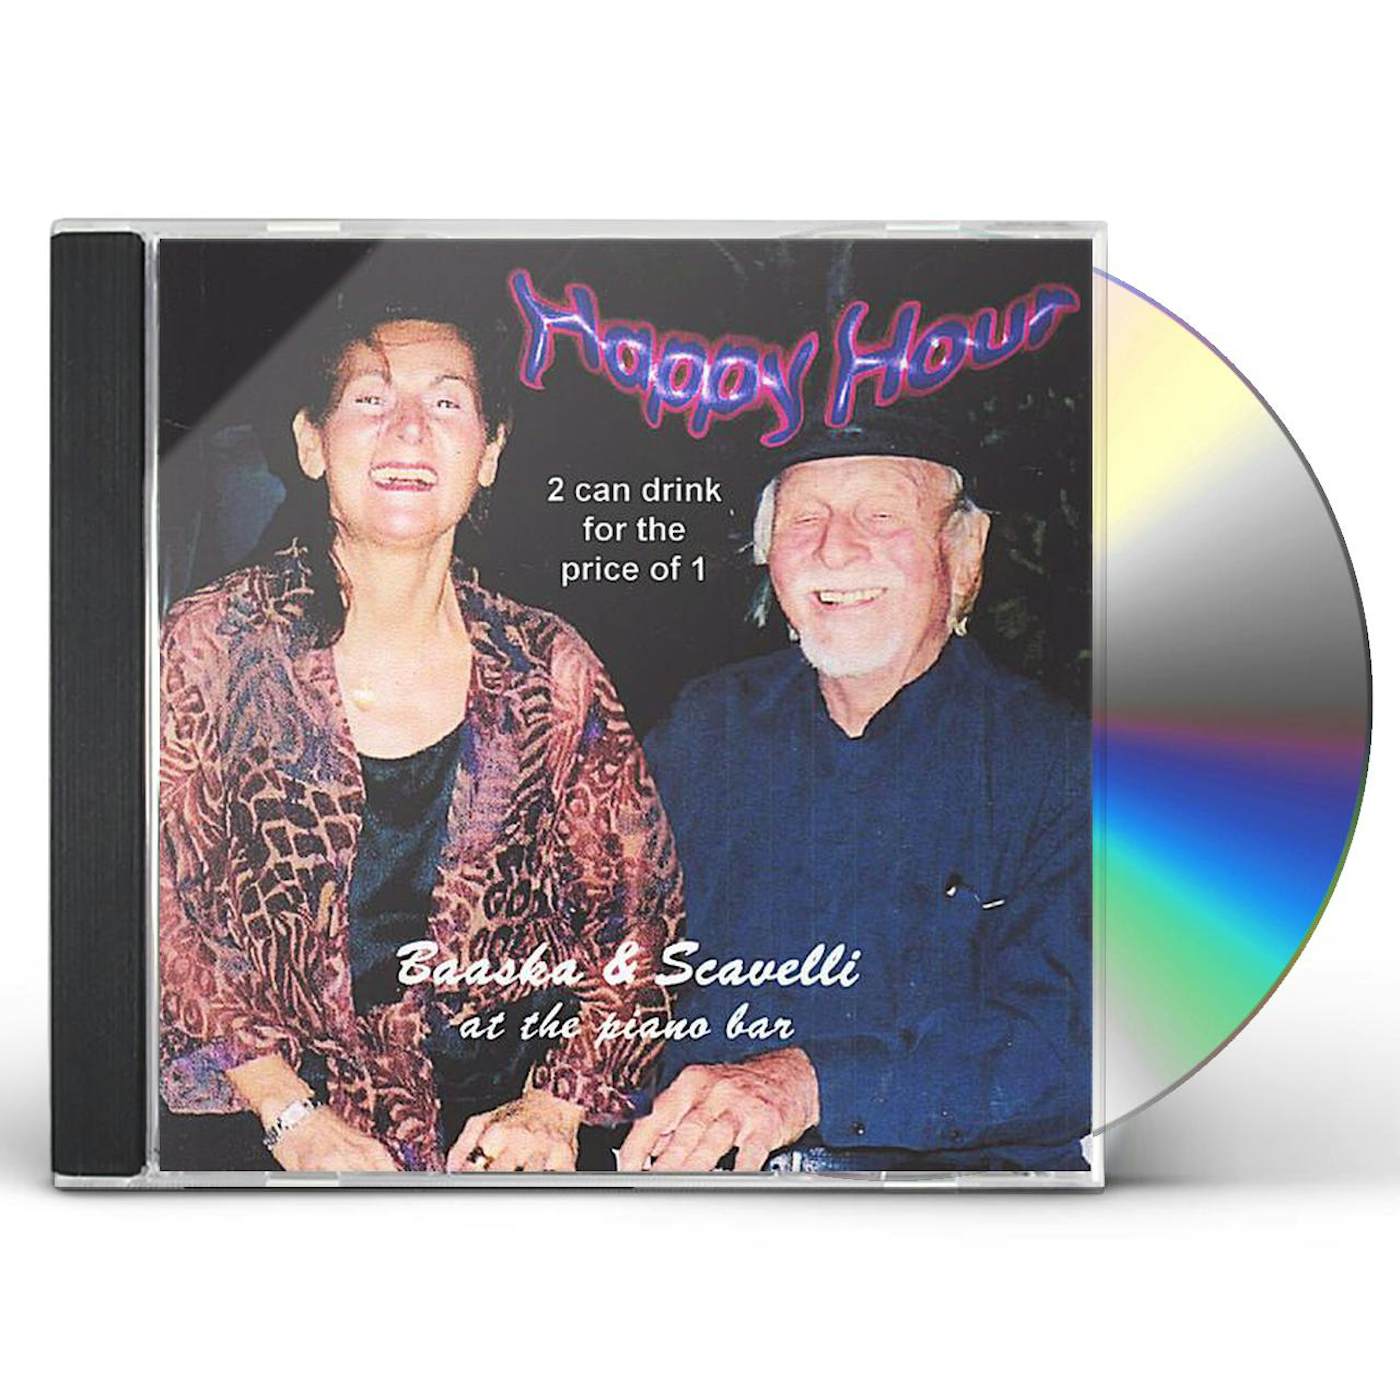 Baaska & Scavelli HAPPY HOUR CD